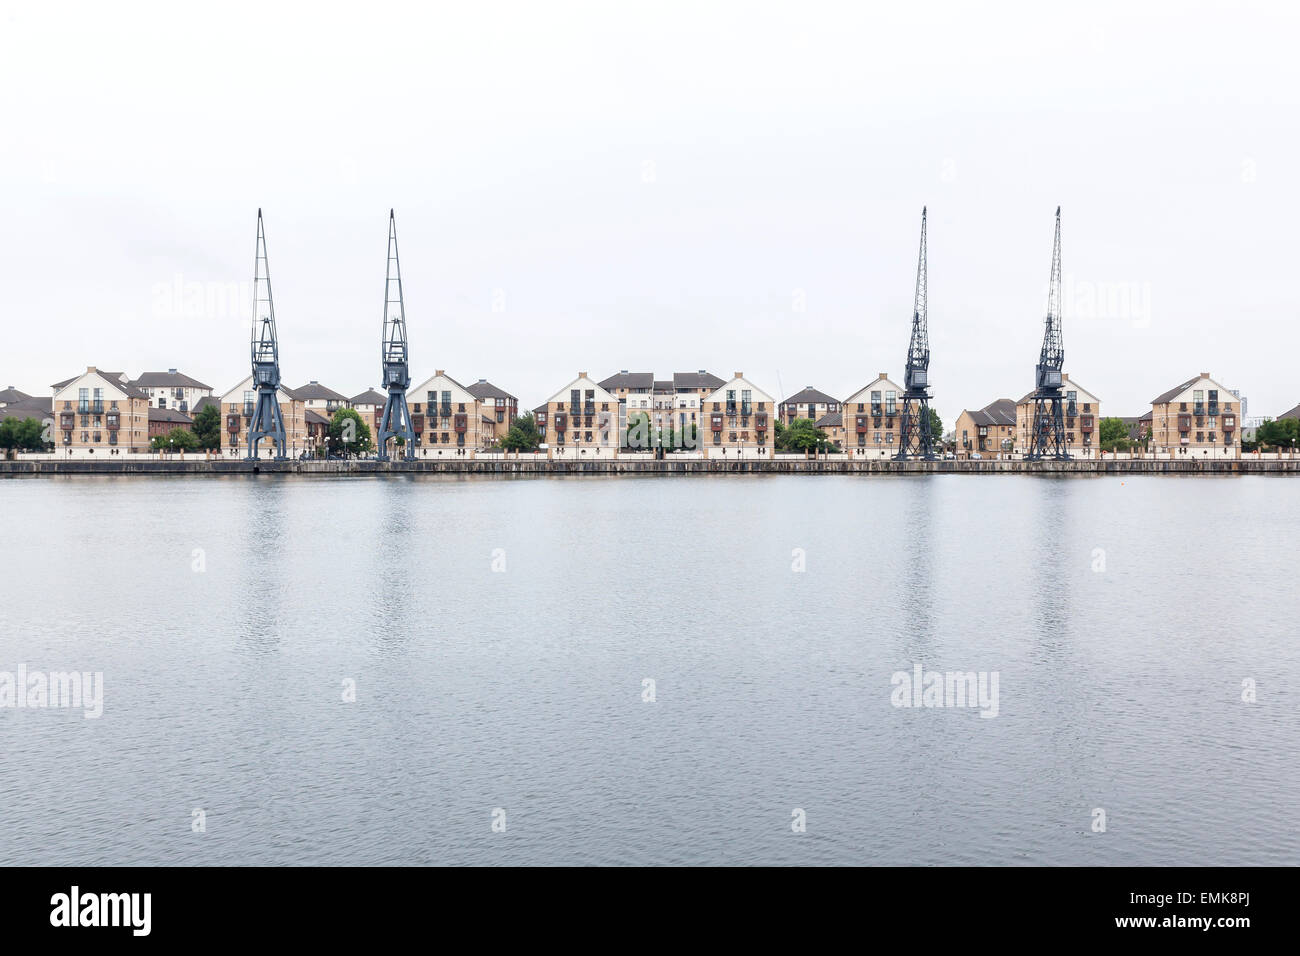 Royal Victoria Dock on the River Thames, London, England, United Kingdom Stock Photo